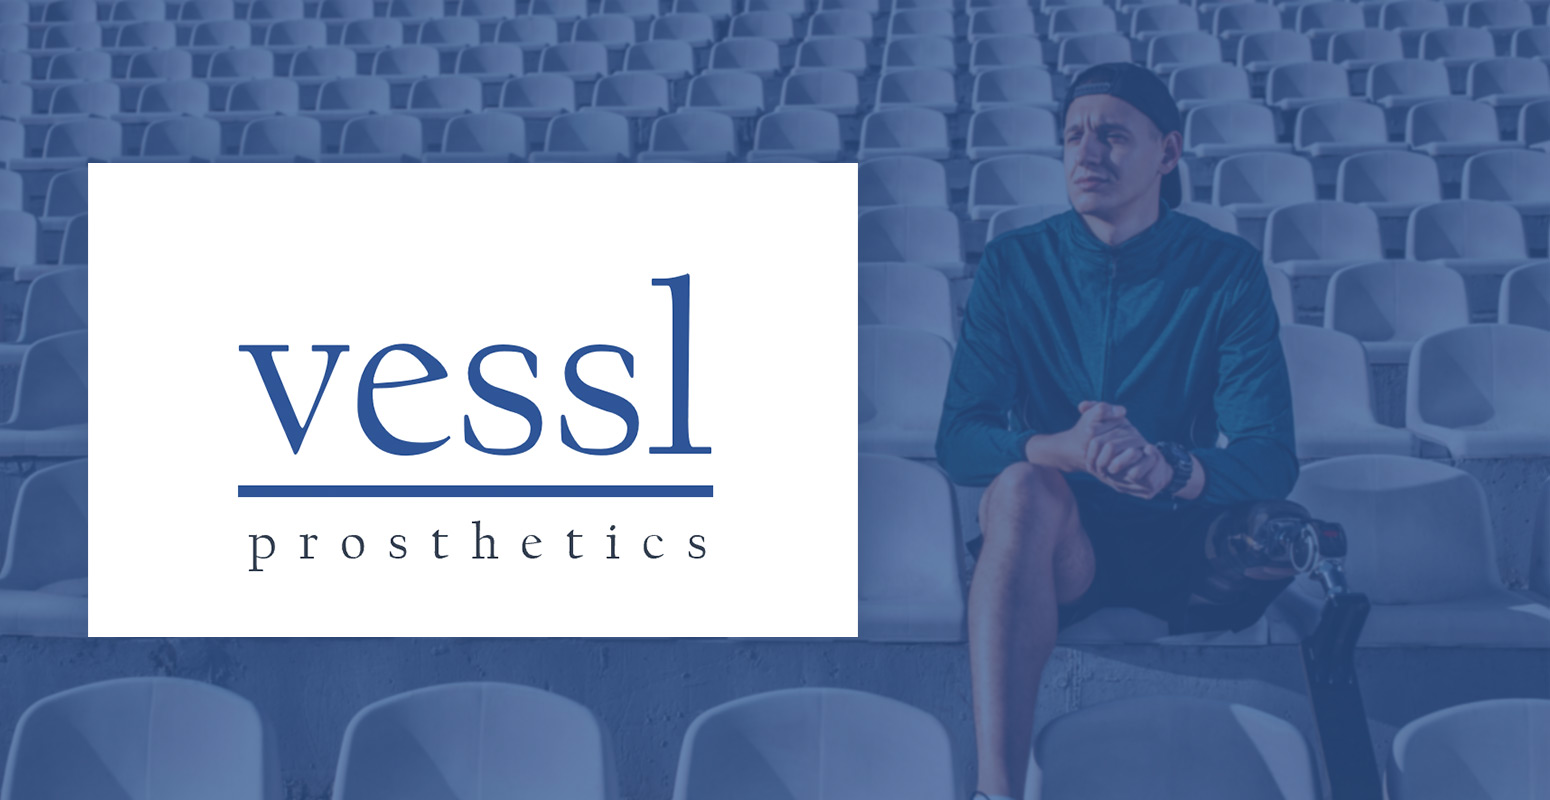 Vessl Logo overlayed on man in bleachers